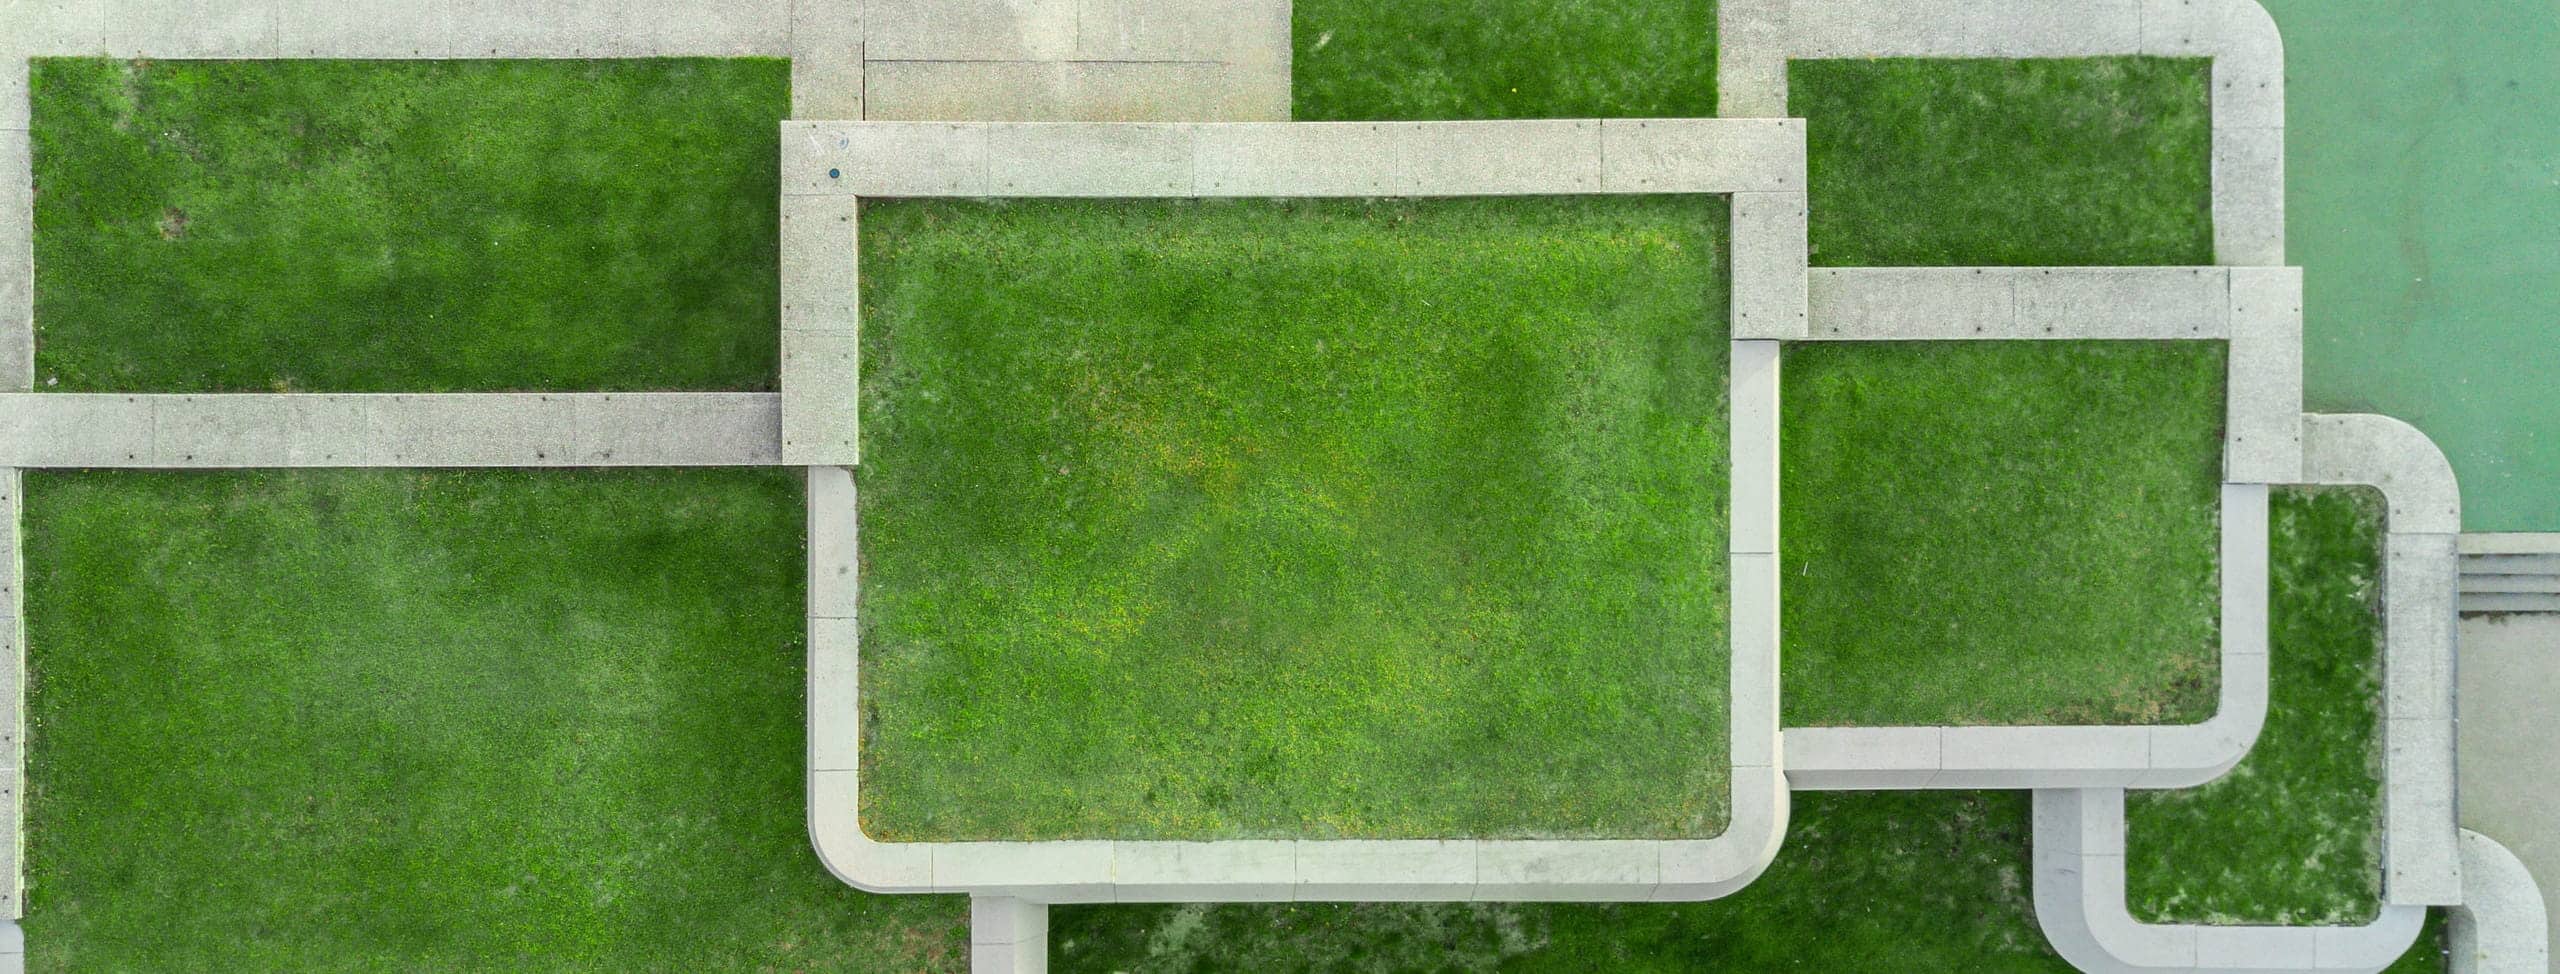 Geometric lawn